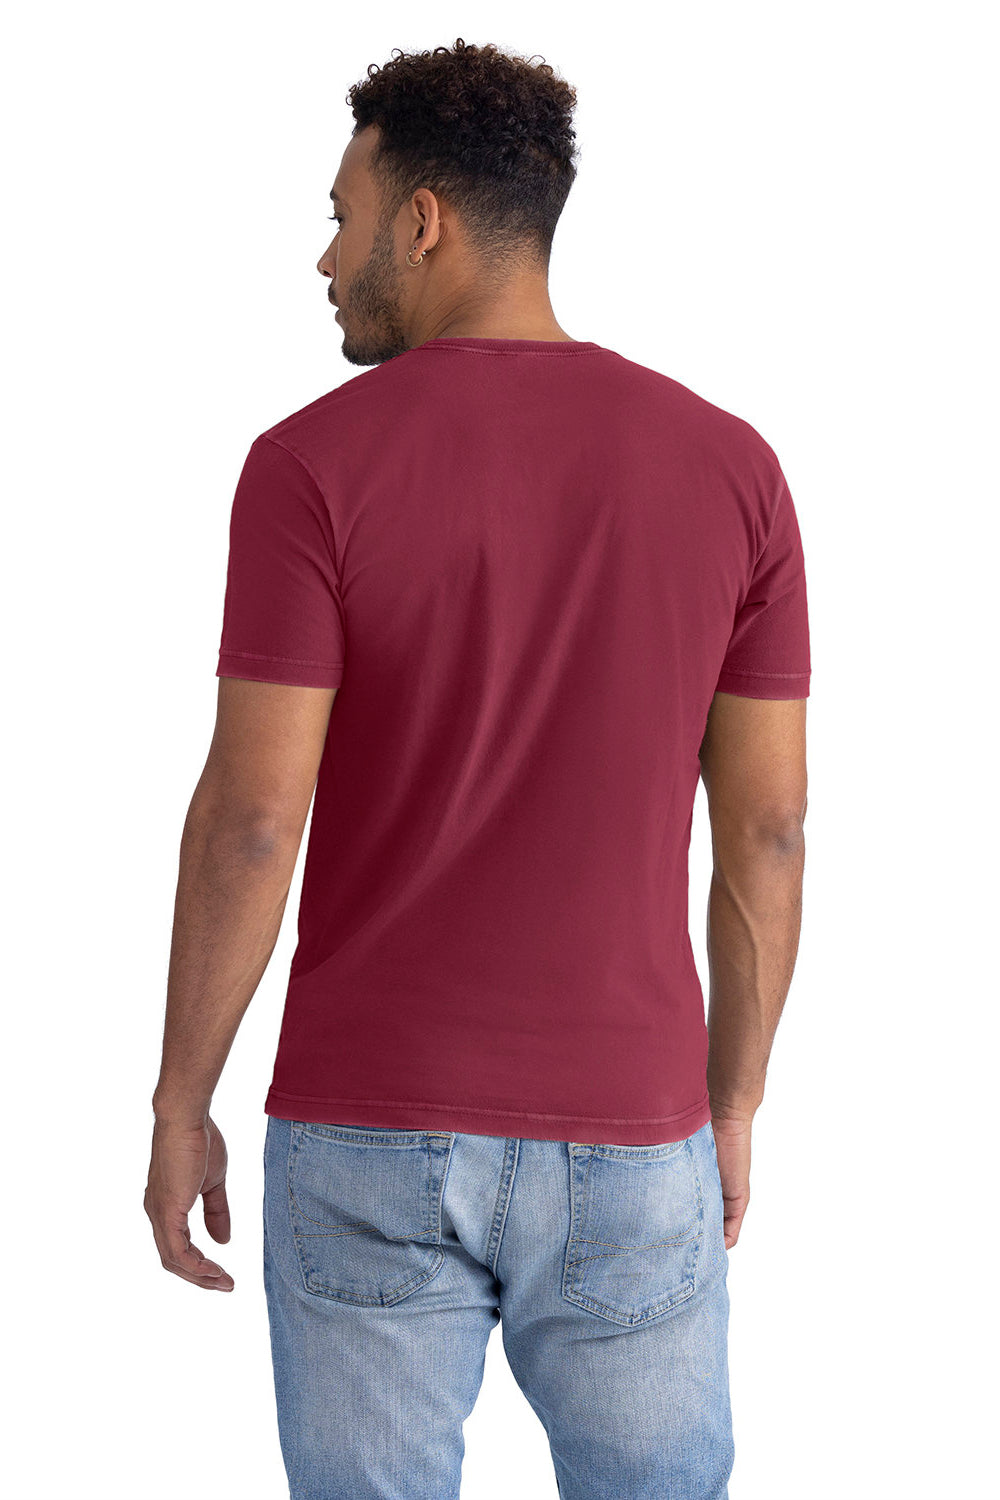 Next Level 3600SW Mens Soft Wash Short Sleeve Crewneck T-Shirt Cardinal Red Back